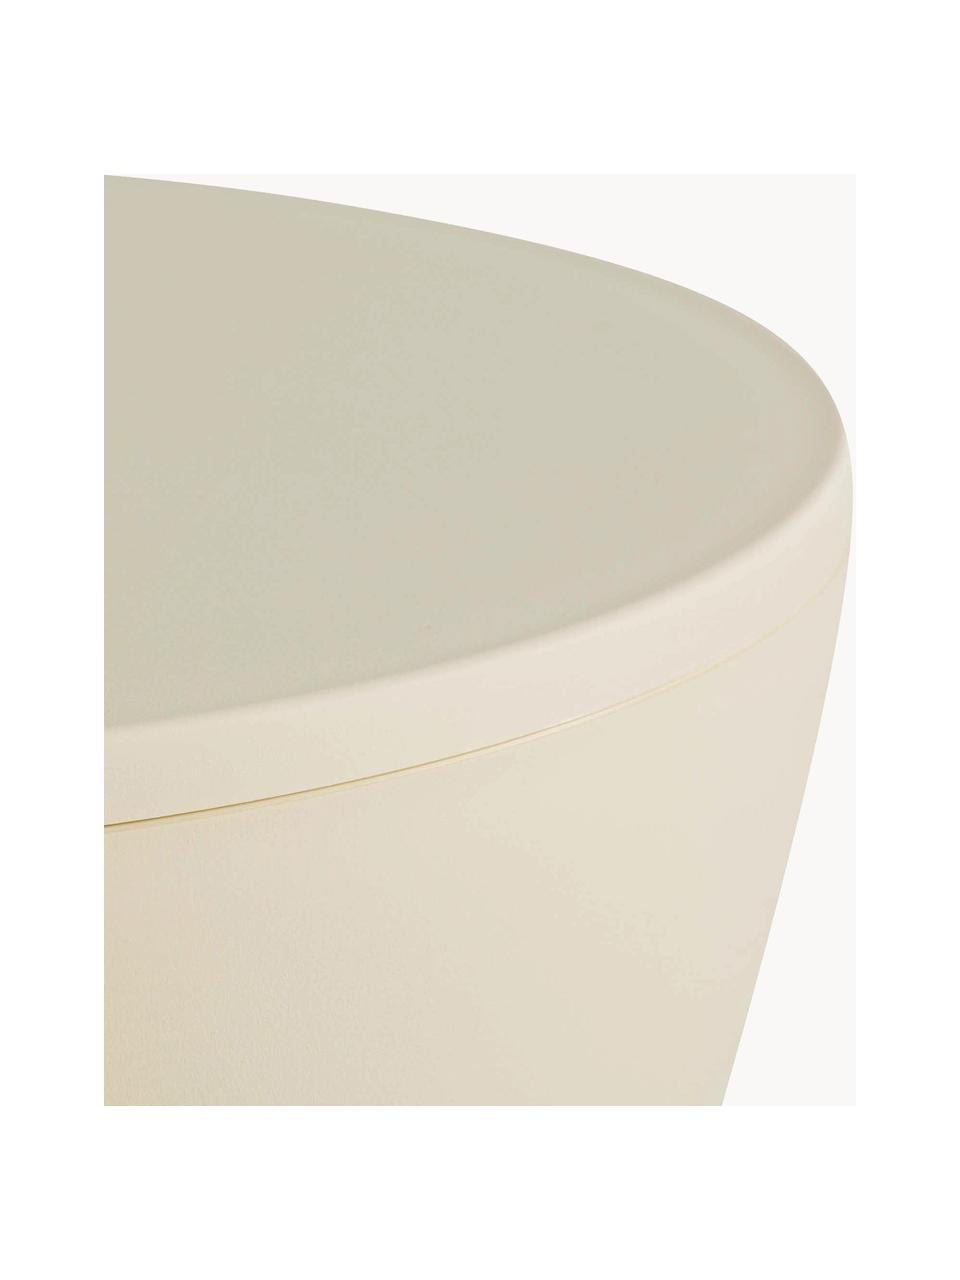 Dizajnový odkladací stolík Prince AHA, Pigmentovaný polypropylén, certifikát Greenguard, Lomená biela, Ø 30 x V 43 cm